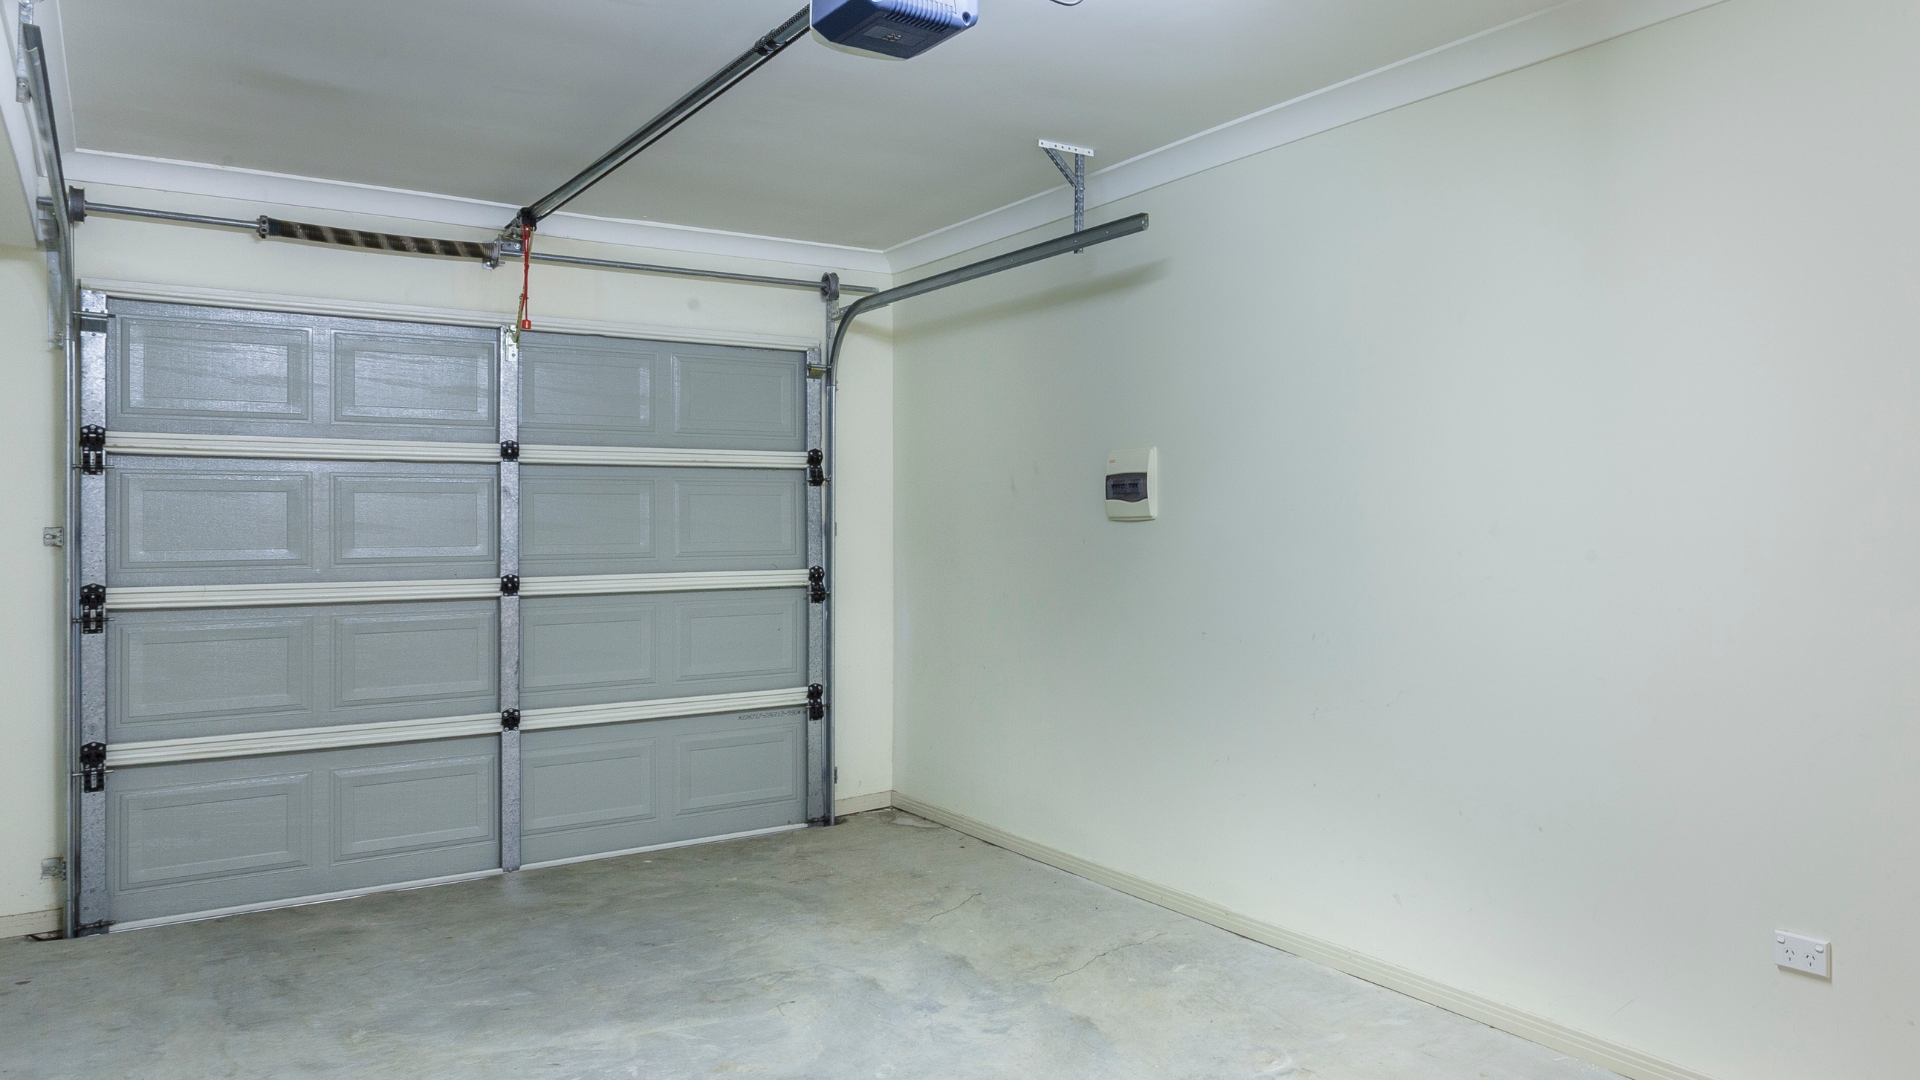 A wind-rated garage door with reinforcement struts